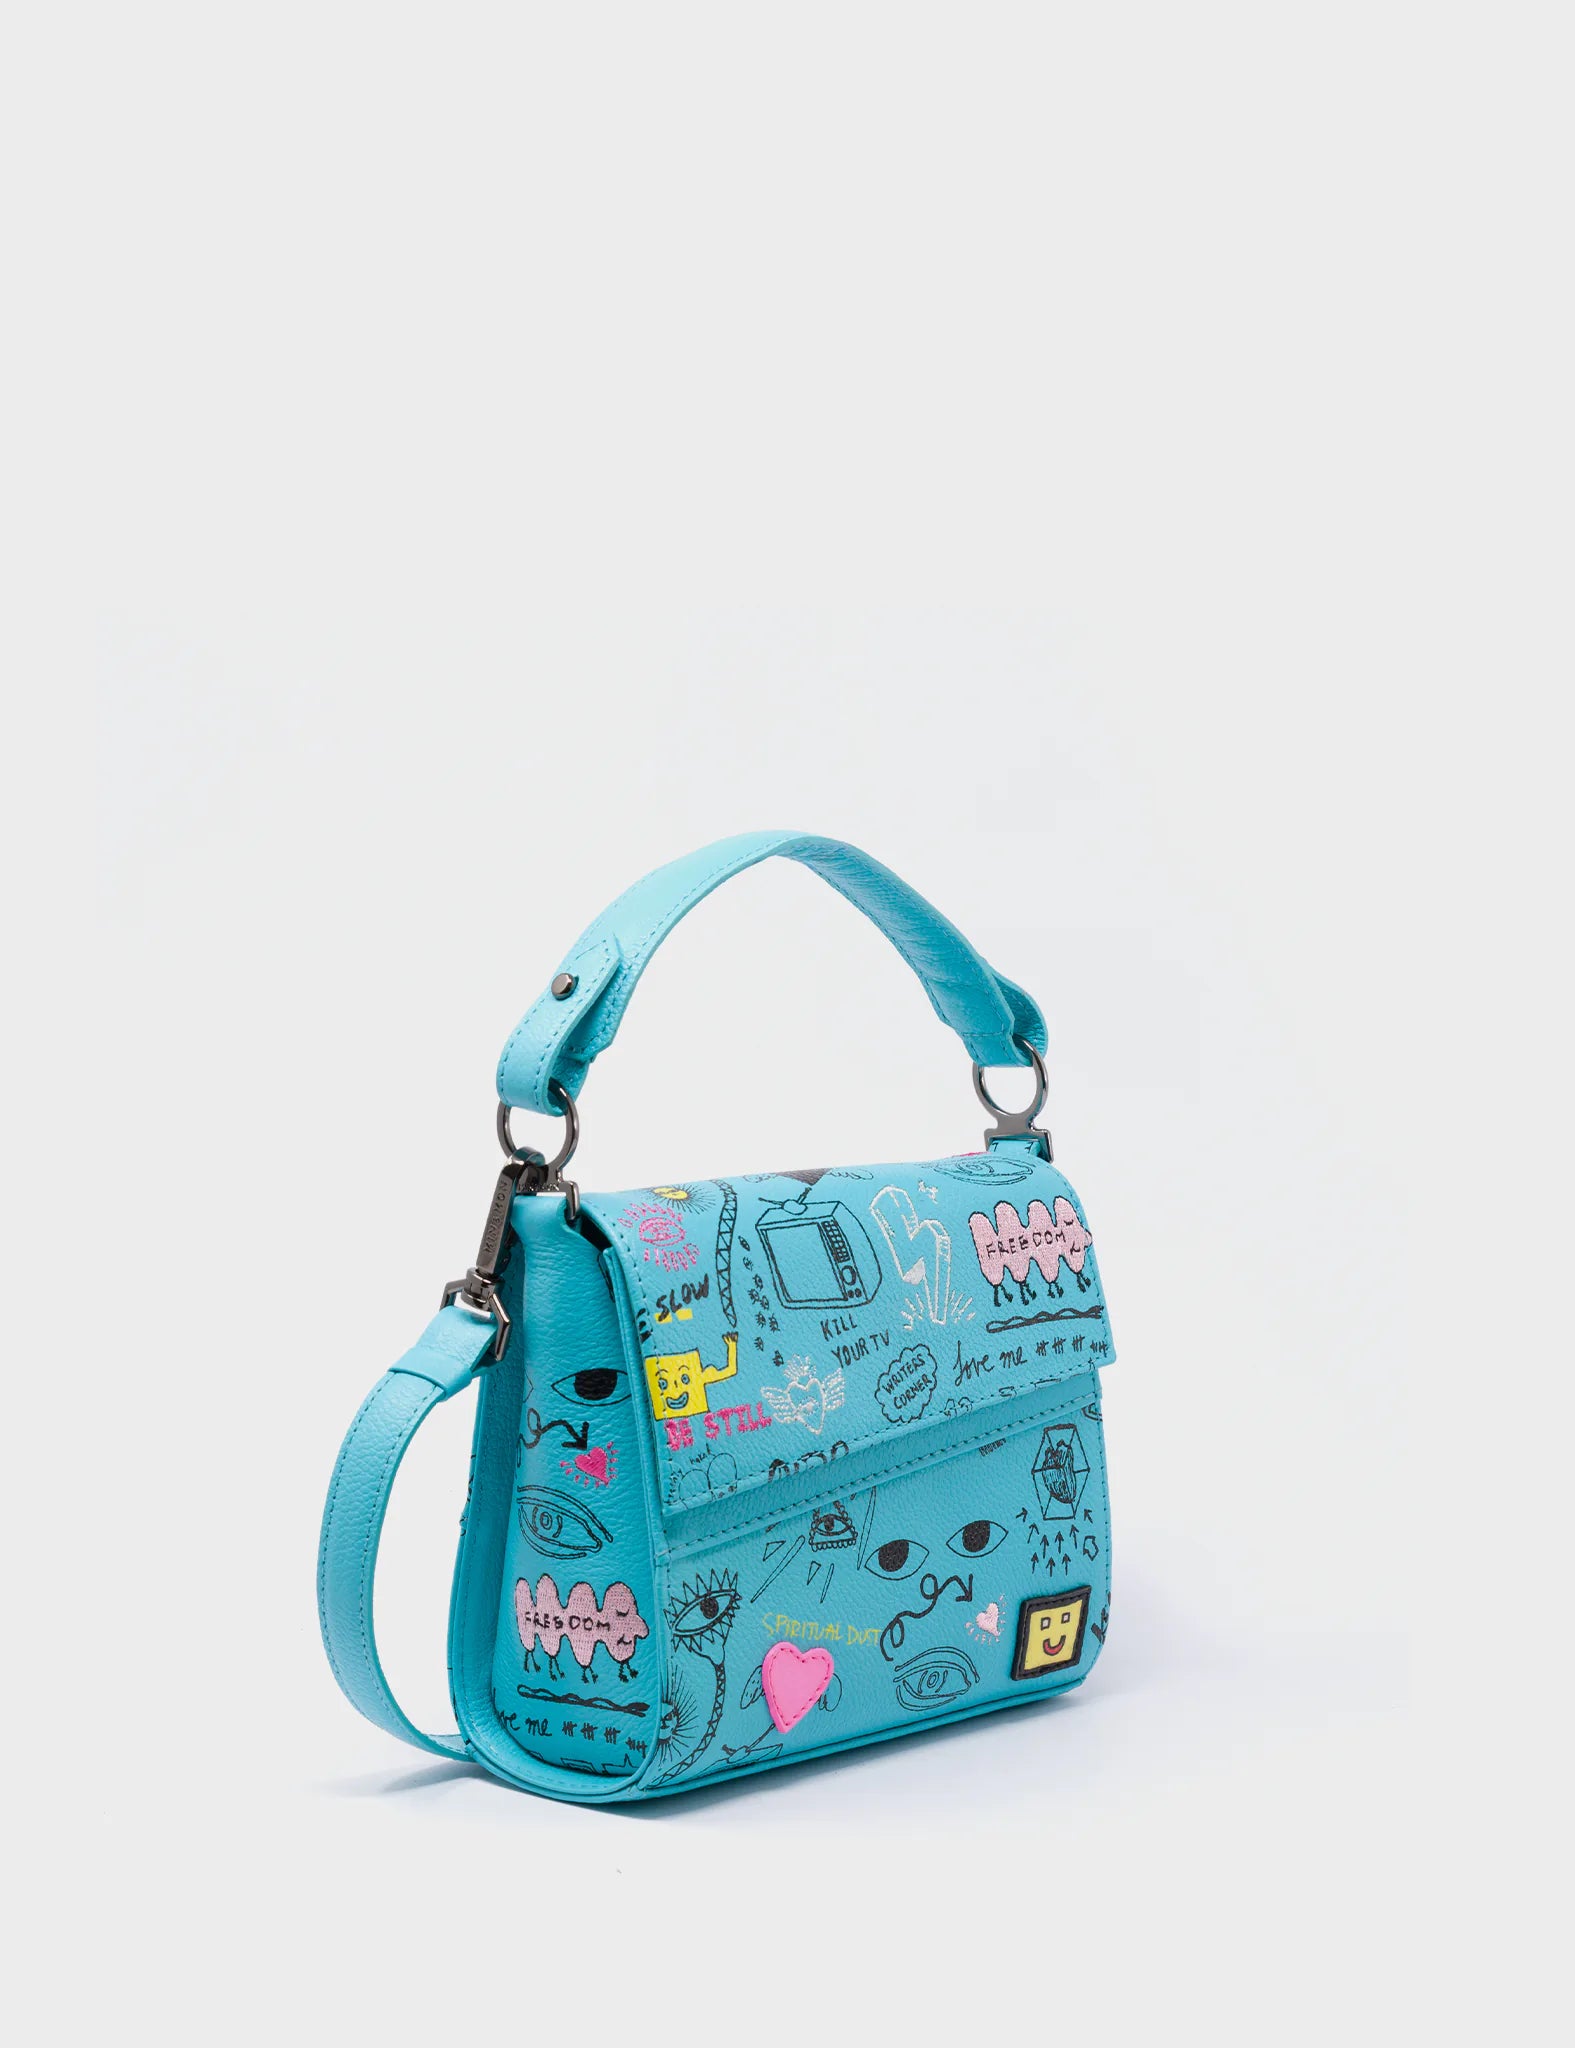 Anastasio Micro Crossbody Handbag Blue Leather - Graffiti Design - Main View